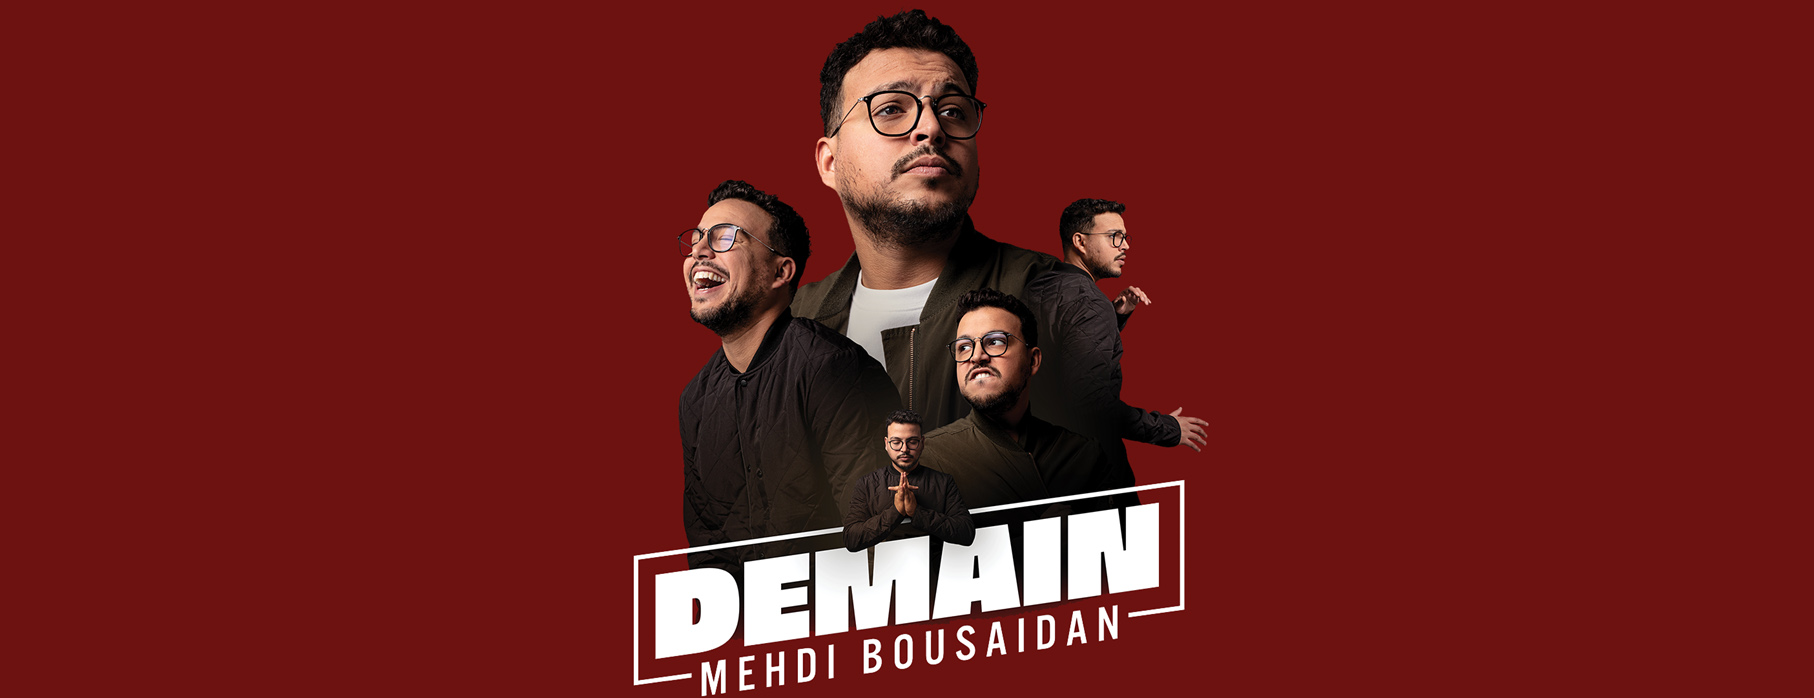 Mehdi Bousaidan (Demain) - En-tête